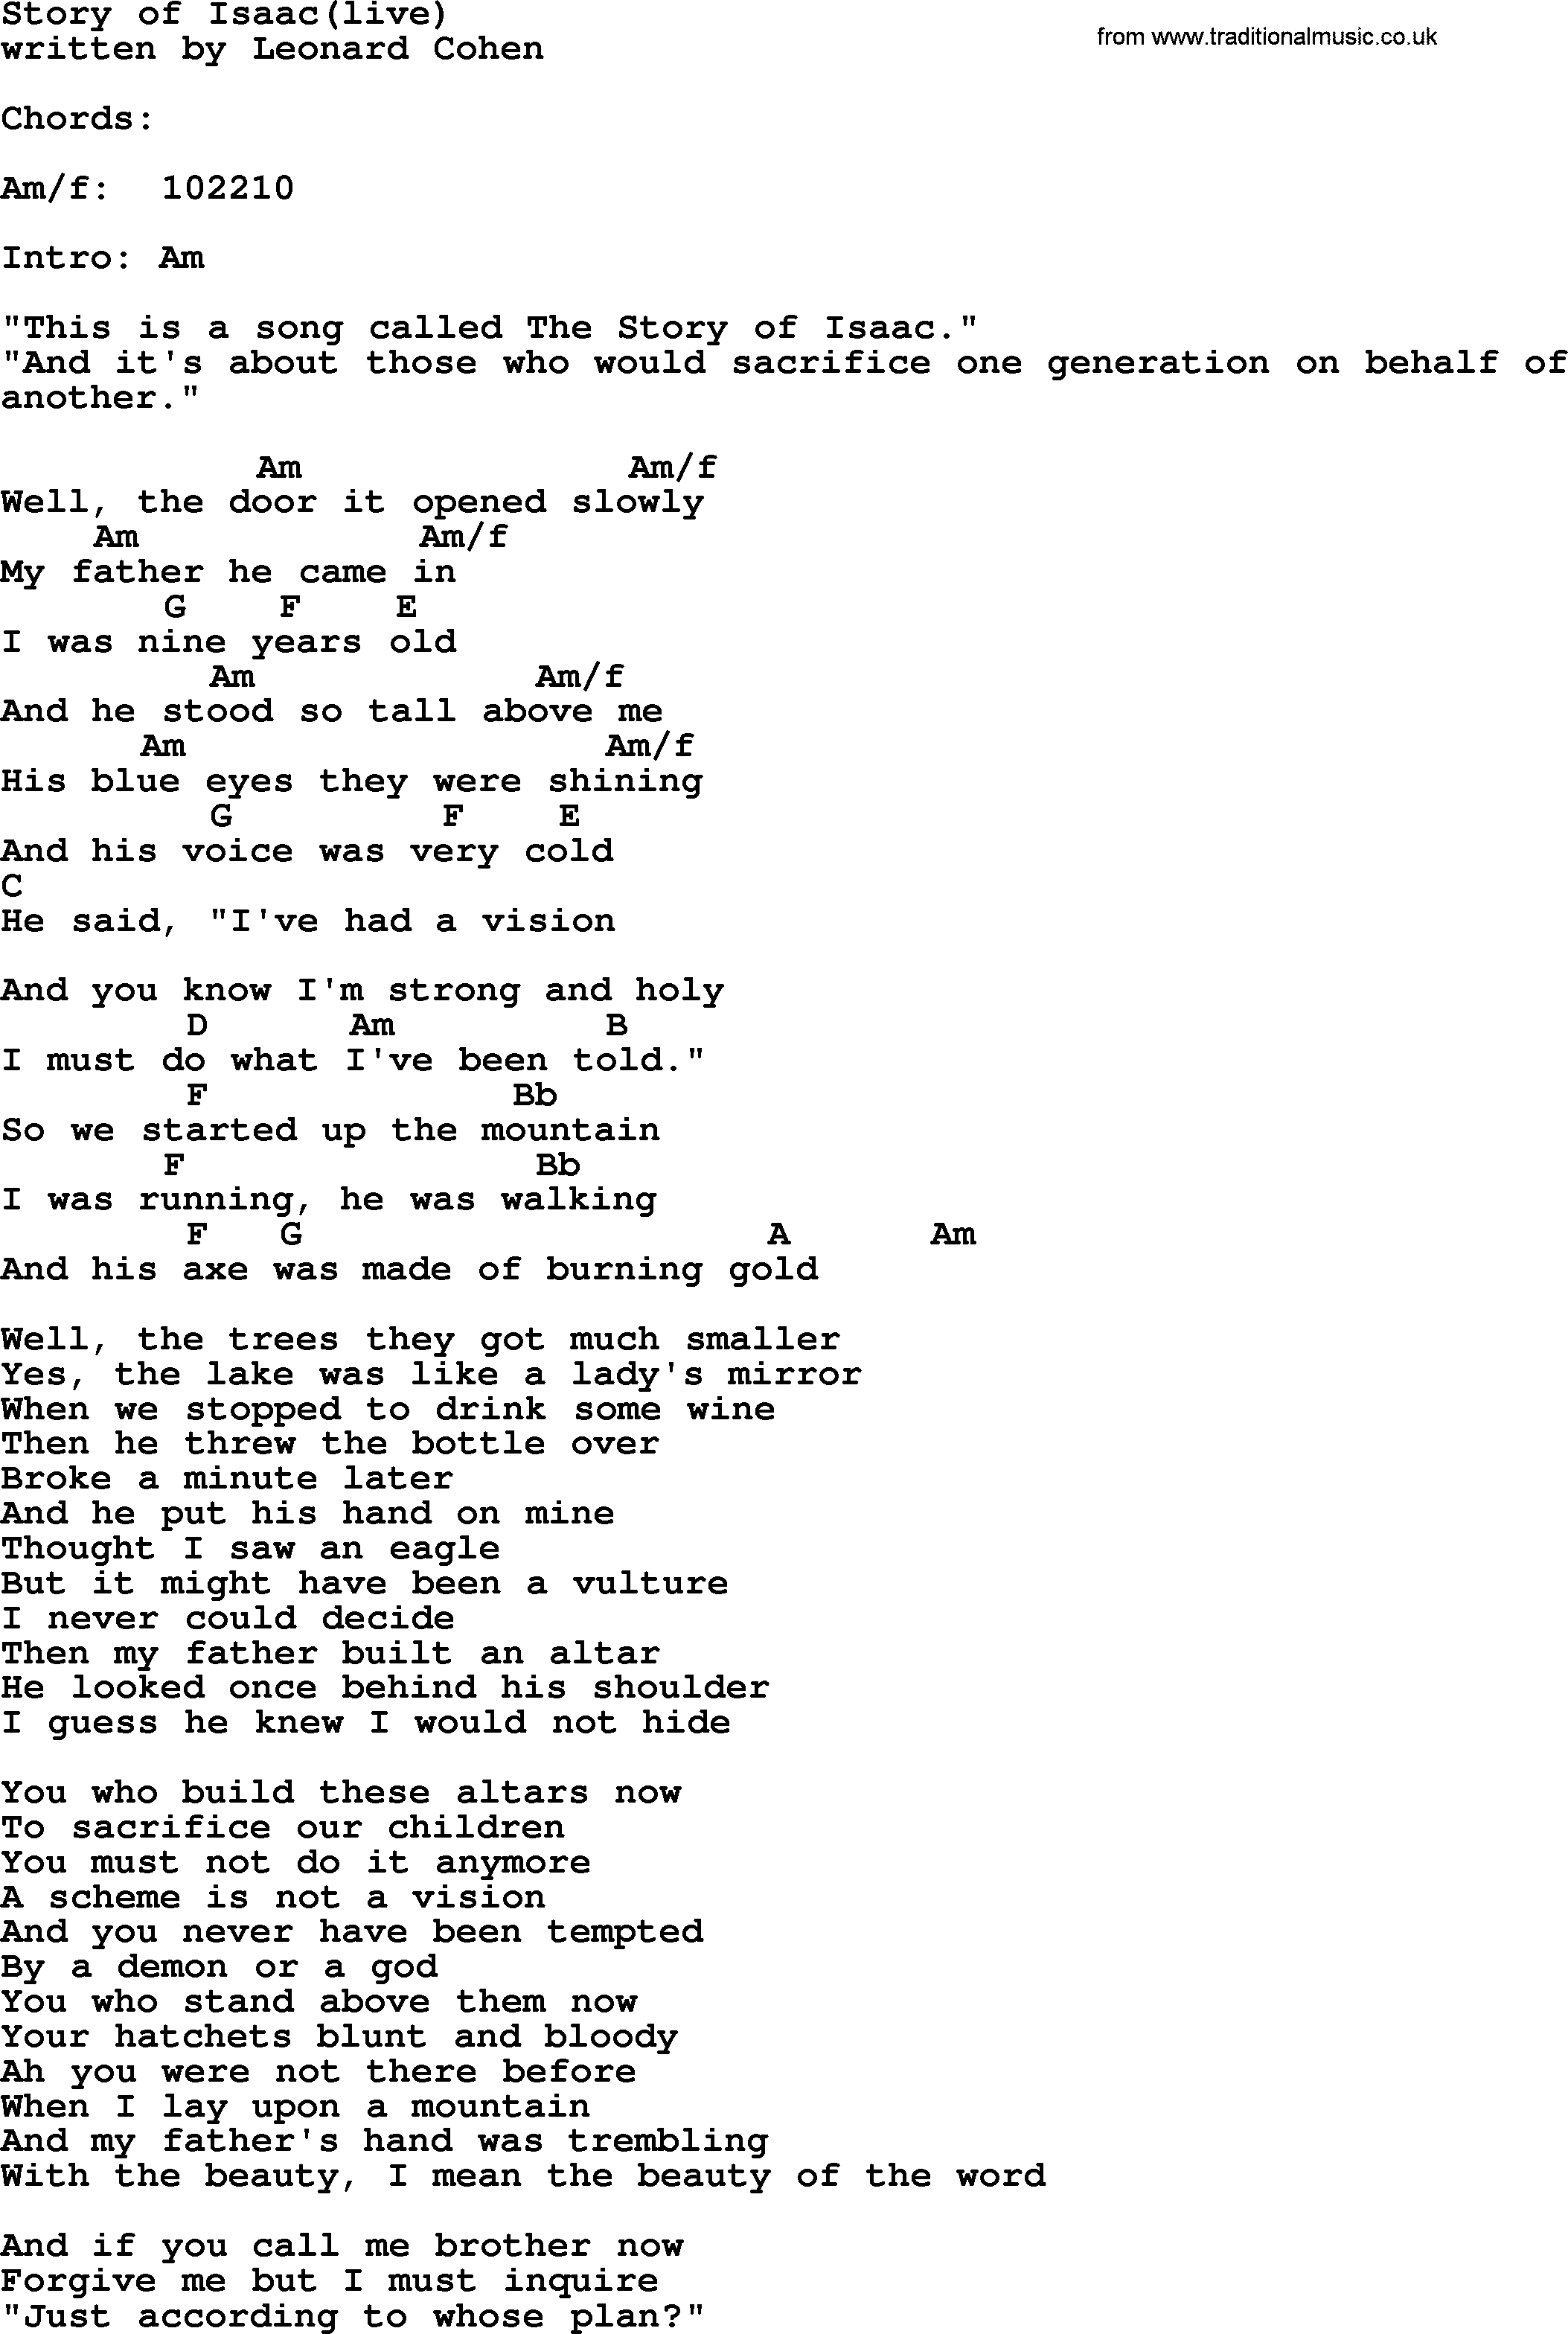 Leonard Cohen song Story Of Isaac(live), lyrics and chords